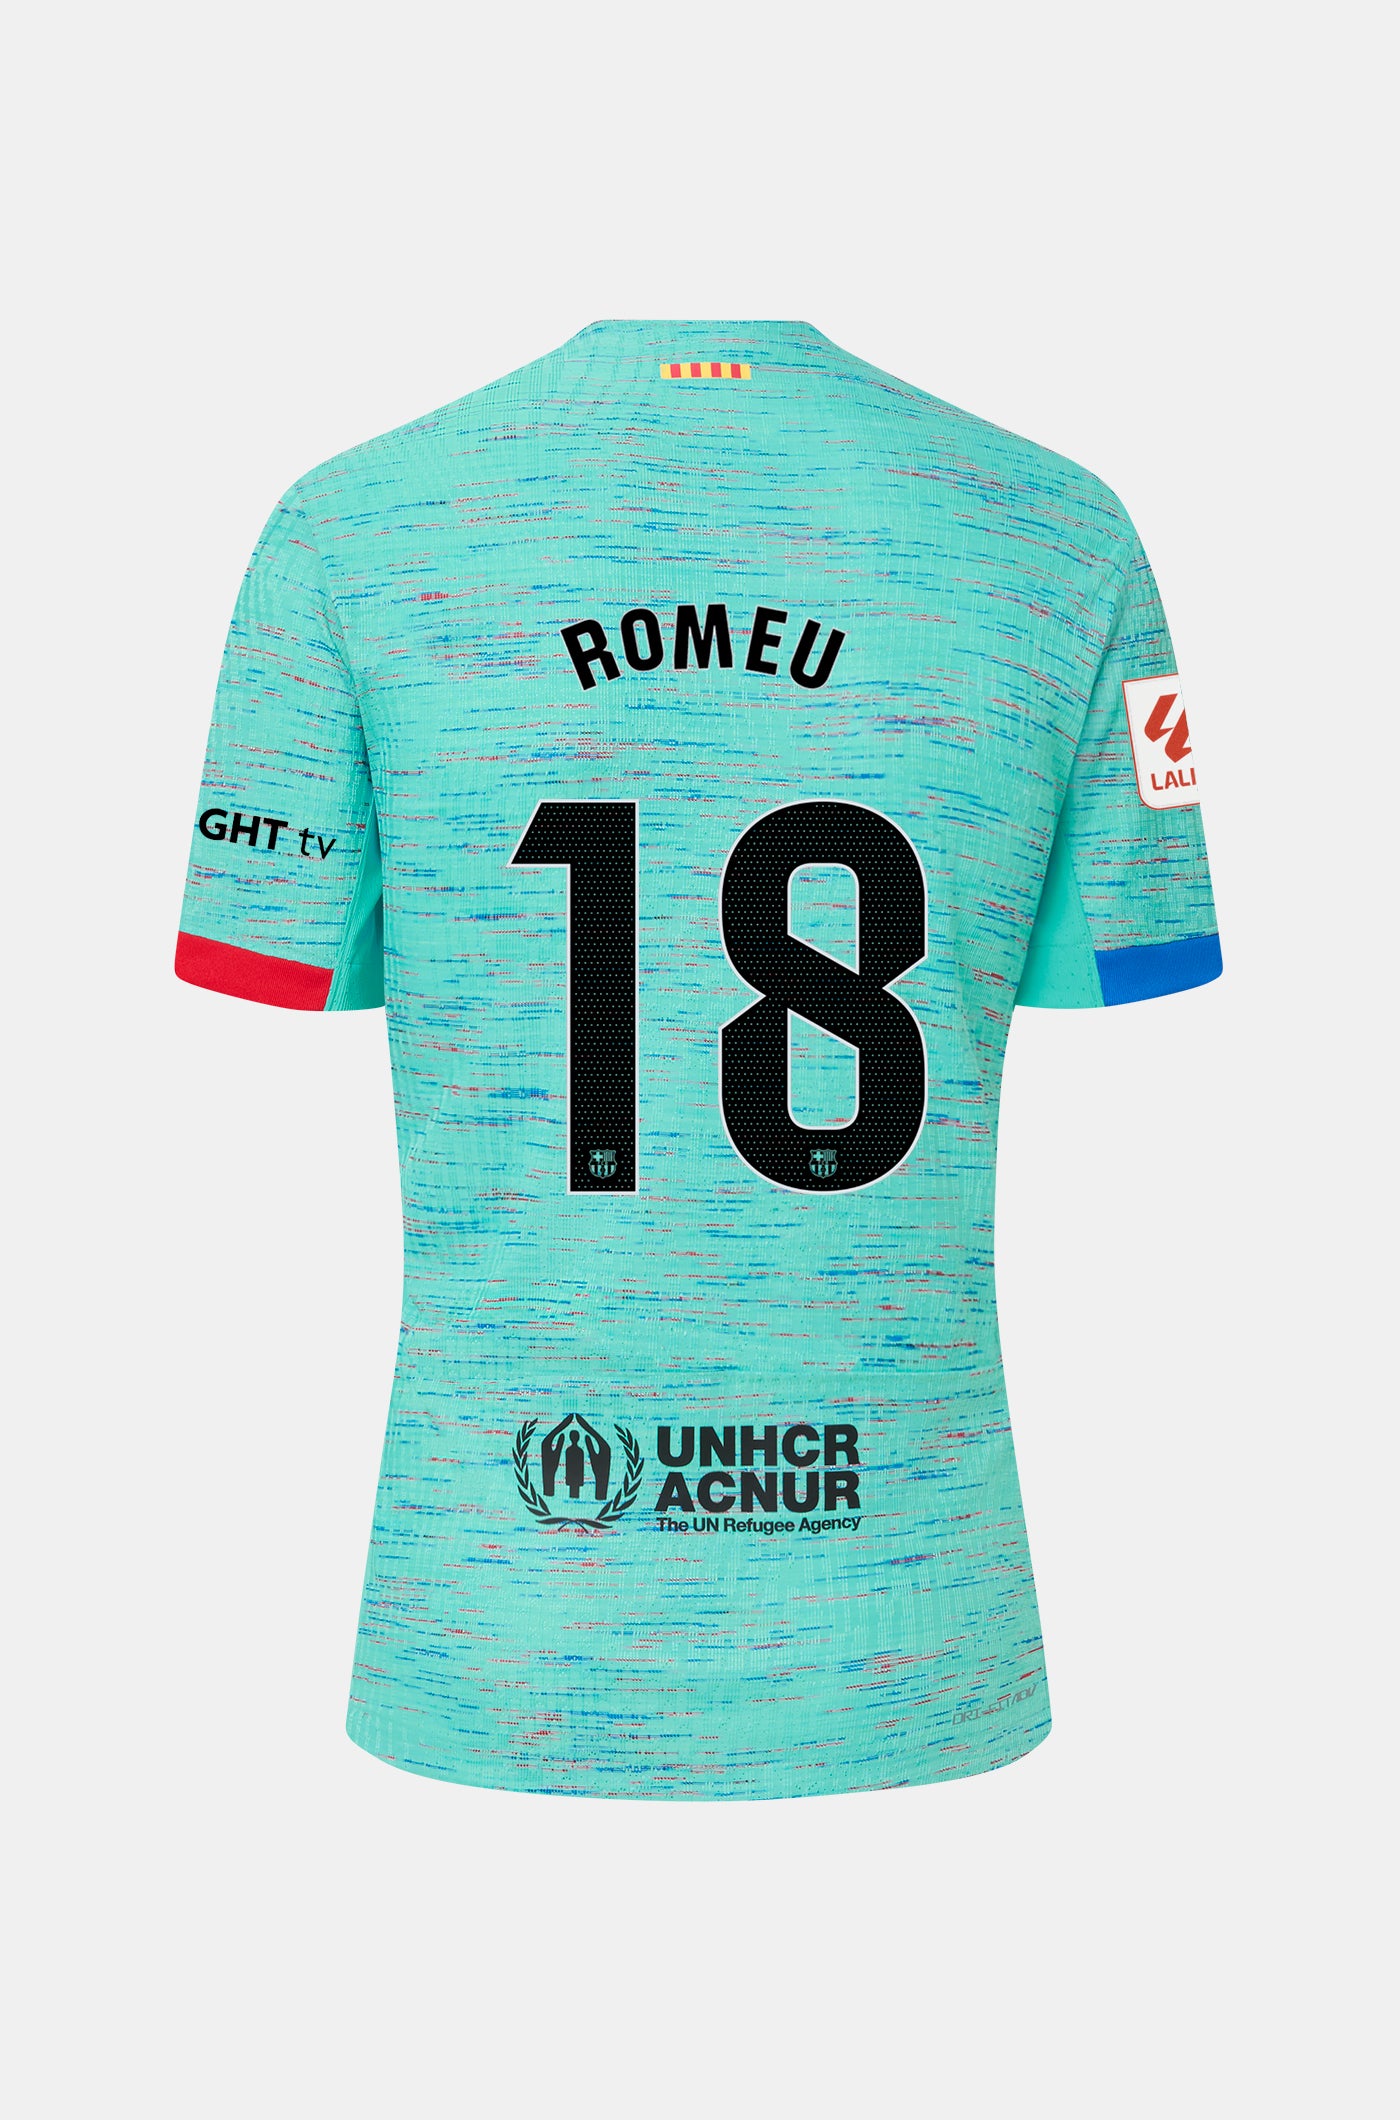 LFP FC Barcelona third shirt 23/24 Player’s Edition  - ROMEU